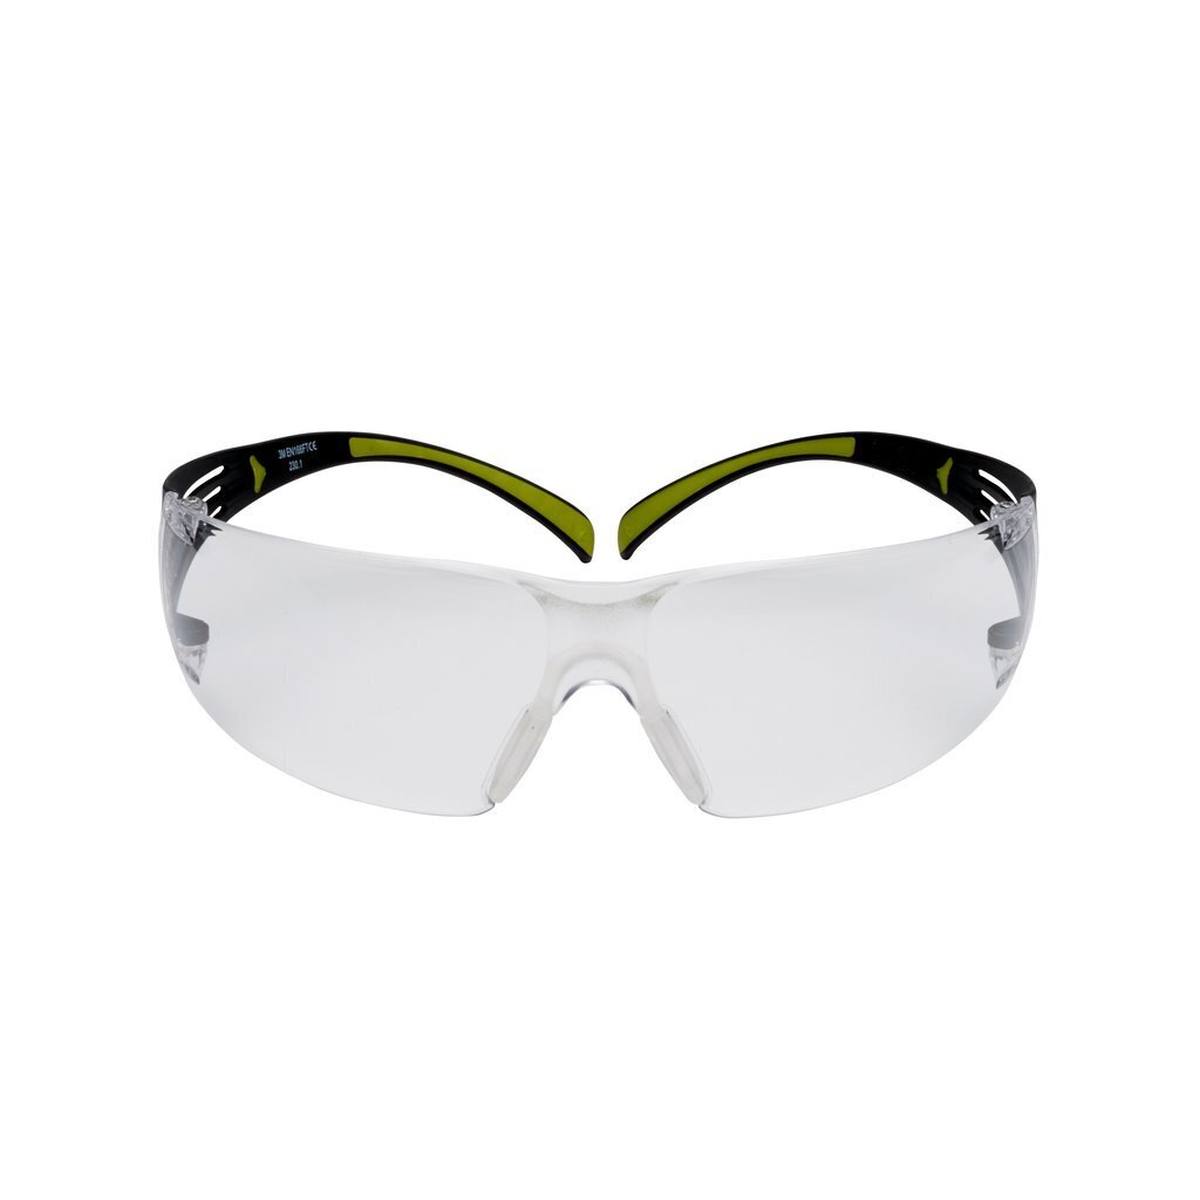 Gafas de protección 3M SecureFit 400, patillas negras/verdes, tratamiento antirrayas/antivaho, lentes transparentes, SF401AS/AF-EU